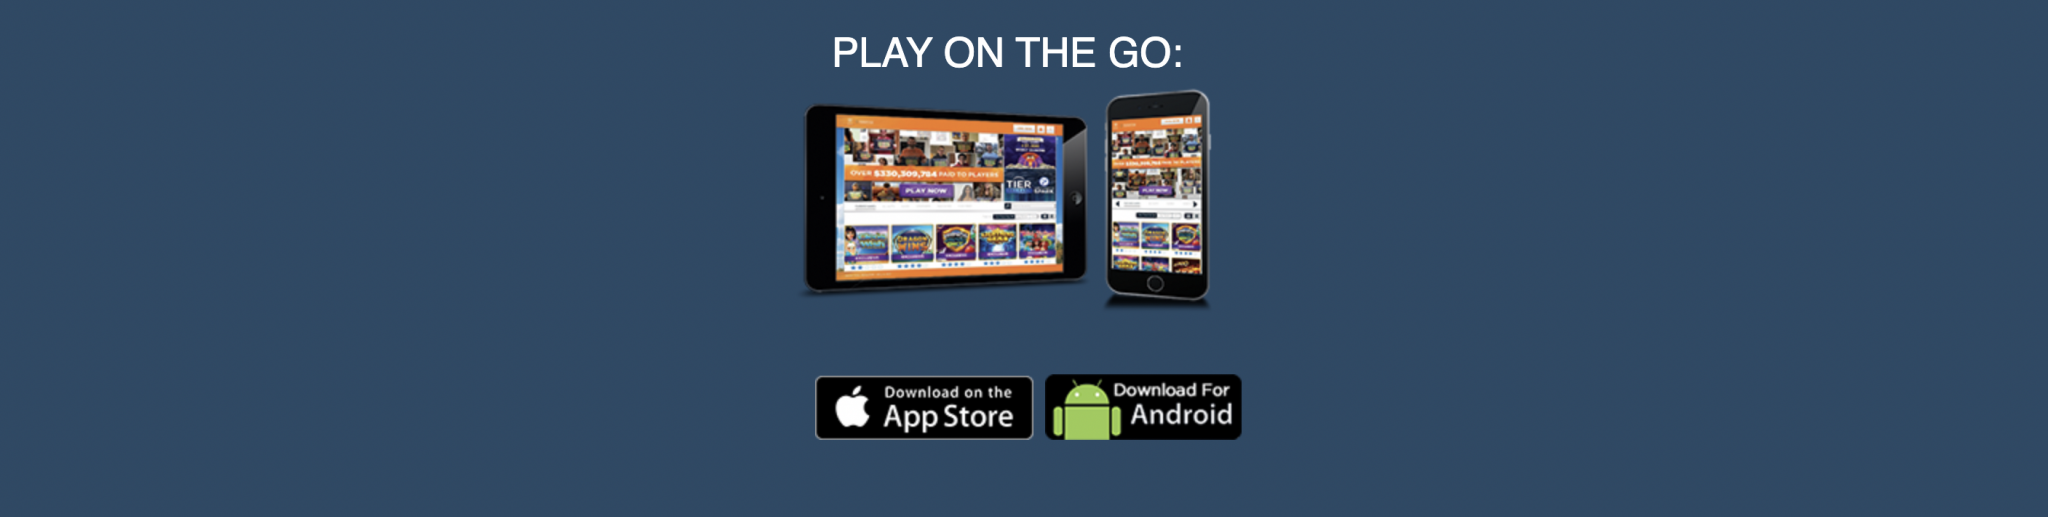 Mohegan Sun Online Casino download the new version for windows